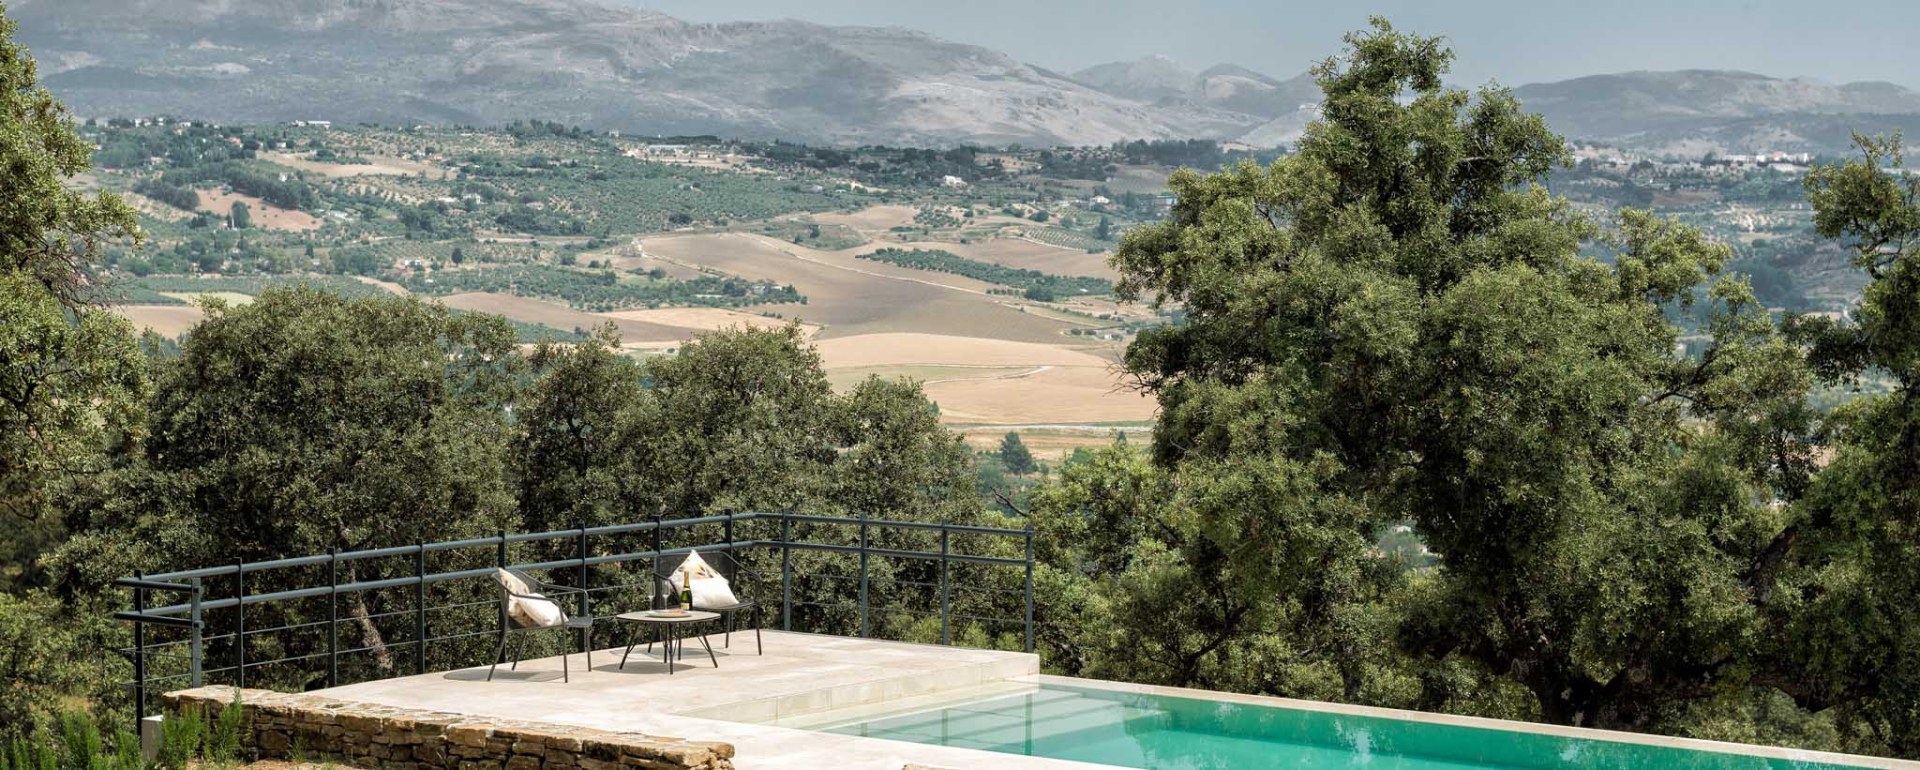 Luxus Ferienhaus Andalusien Mieten